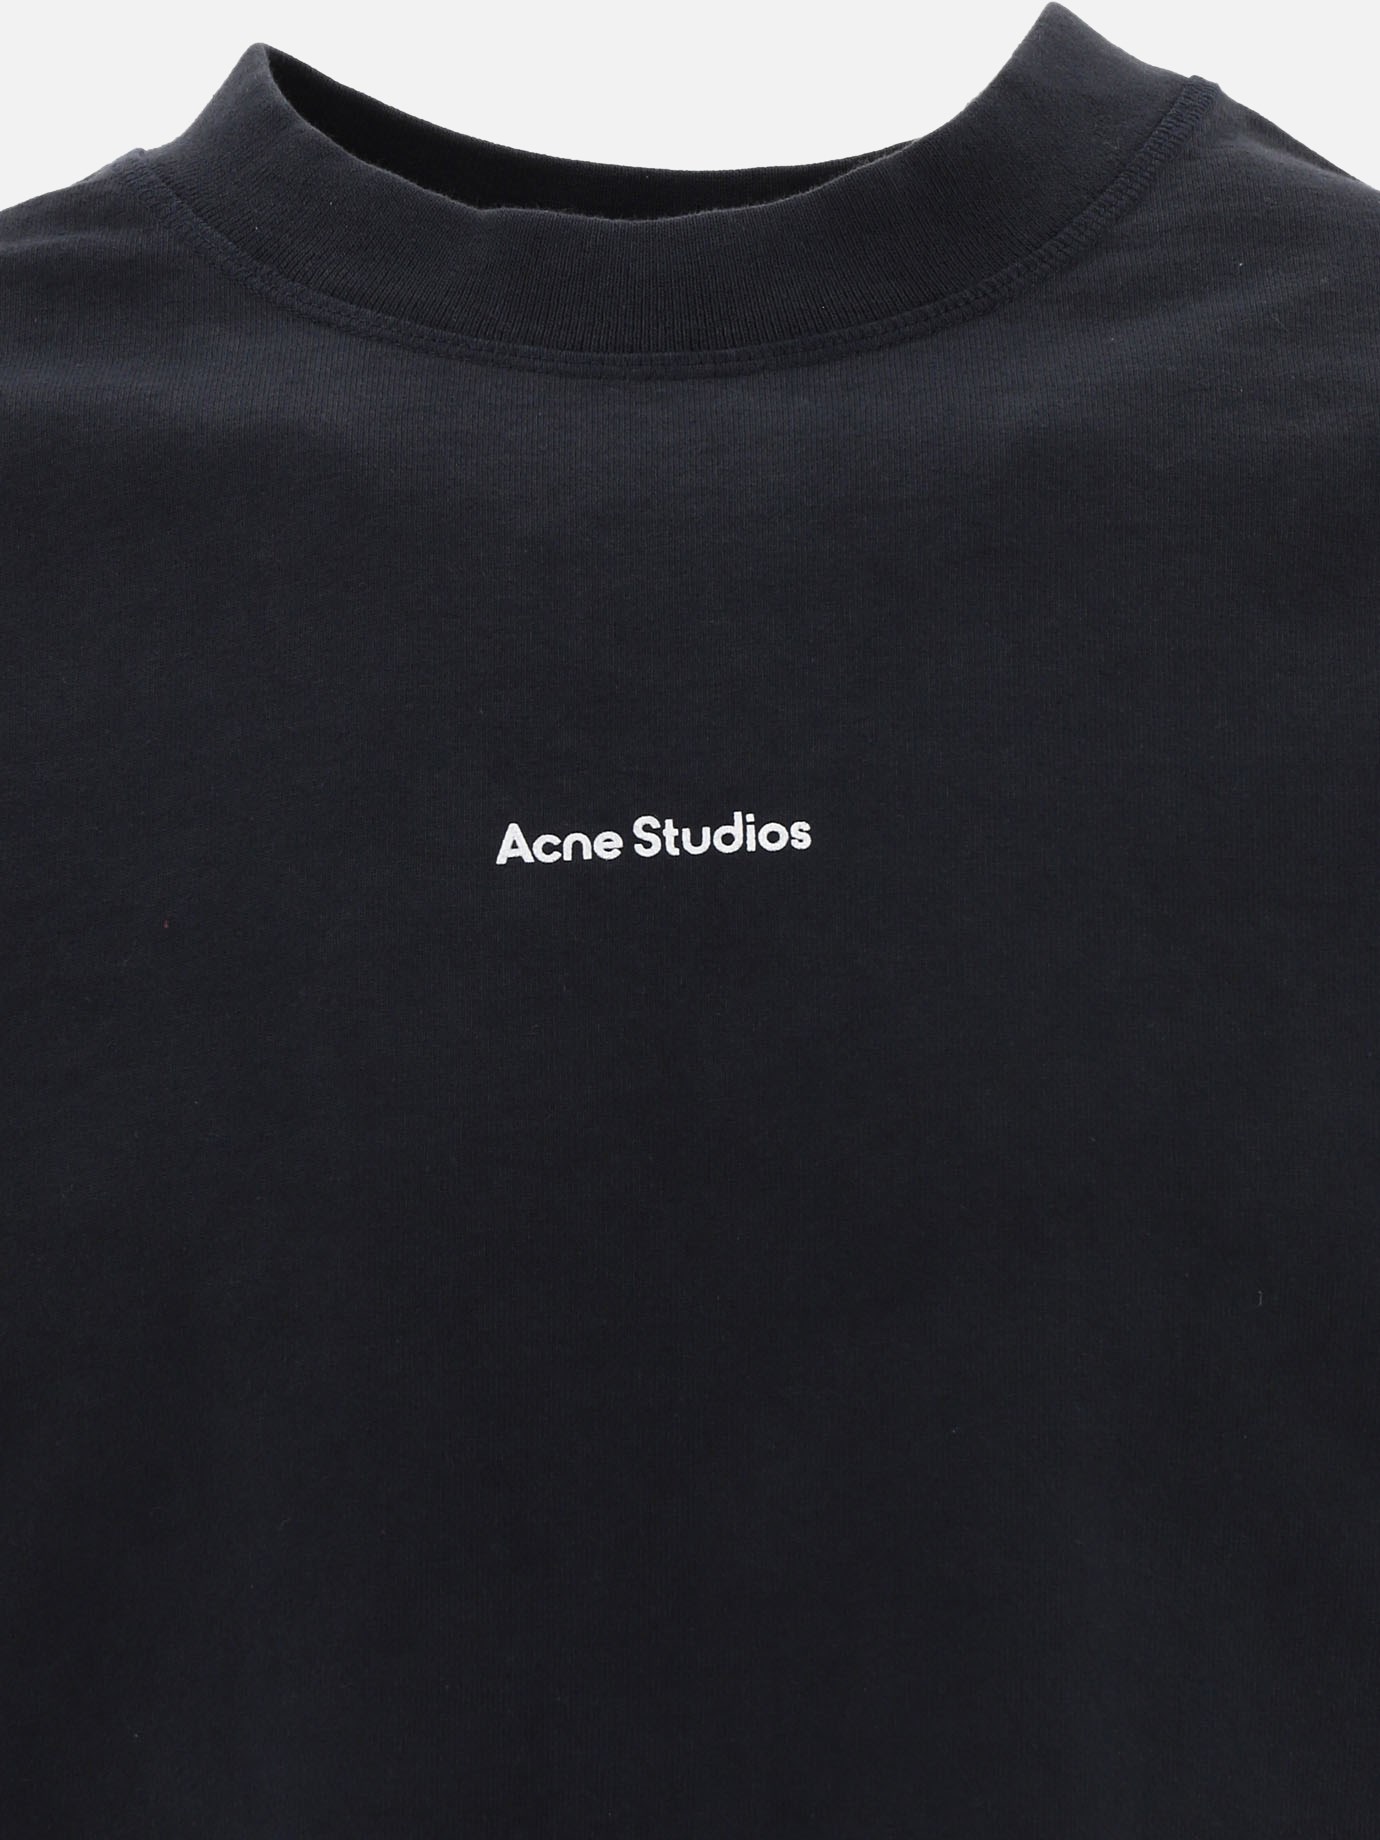  Acne Studios  t-shirt by Acne Studios